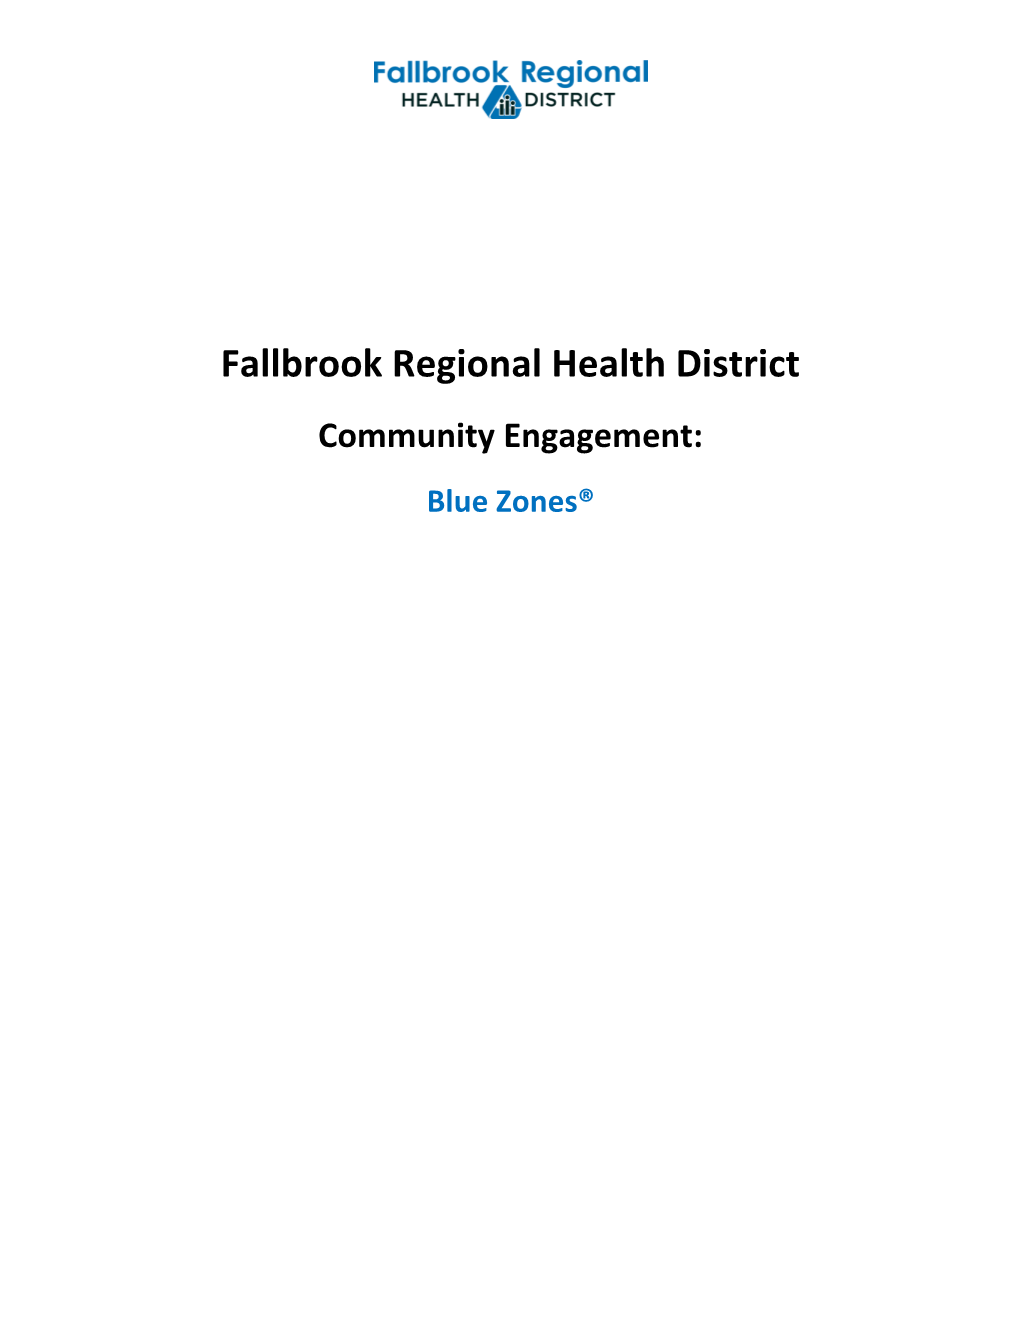 Community Engagement Blue Zones Packet.Pdf